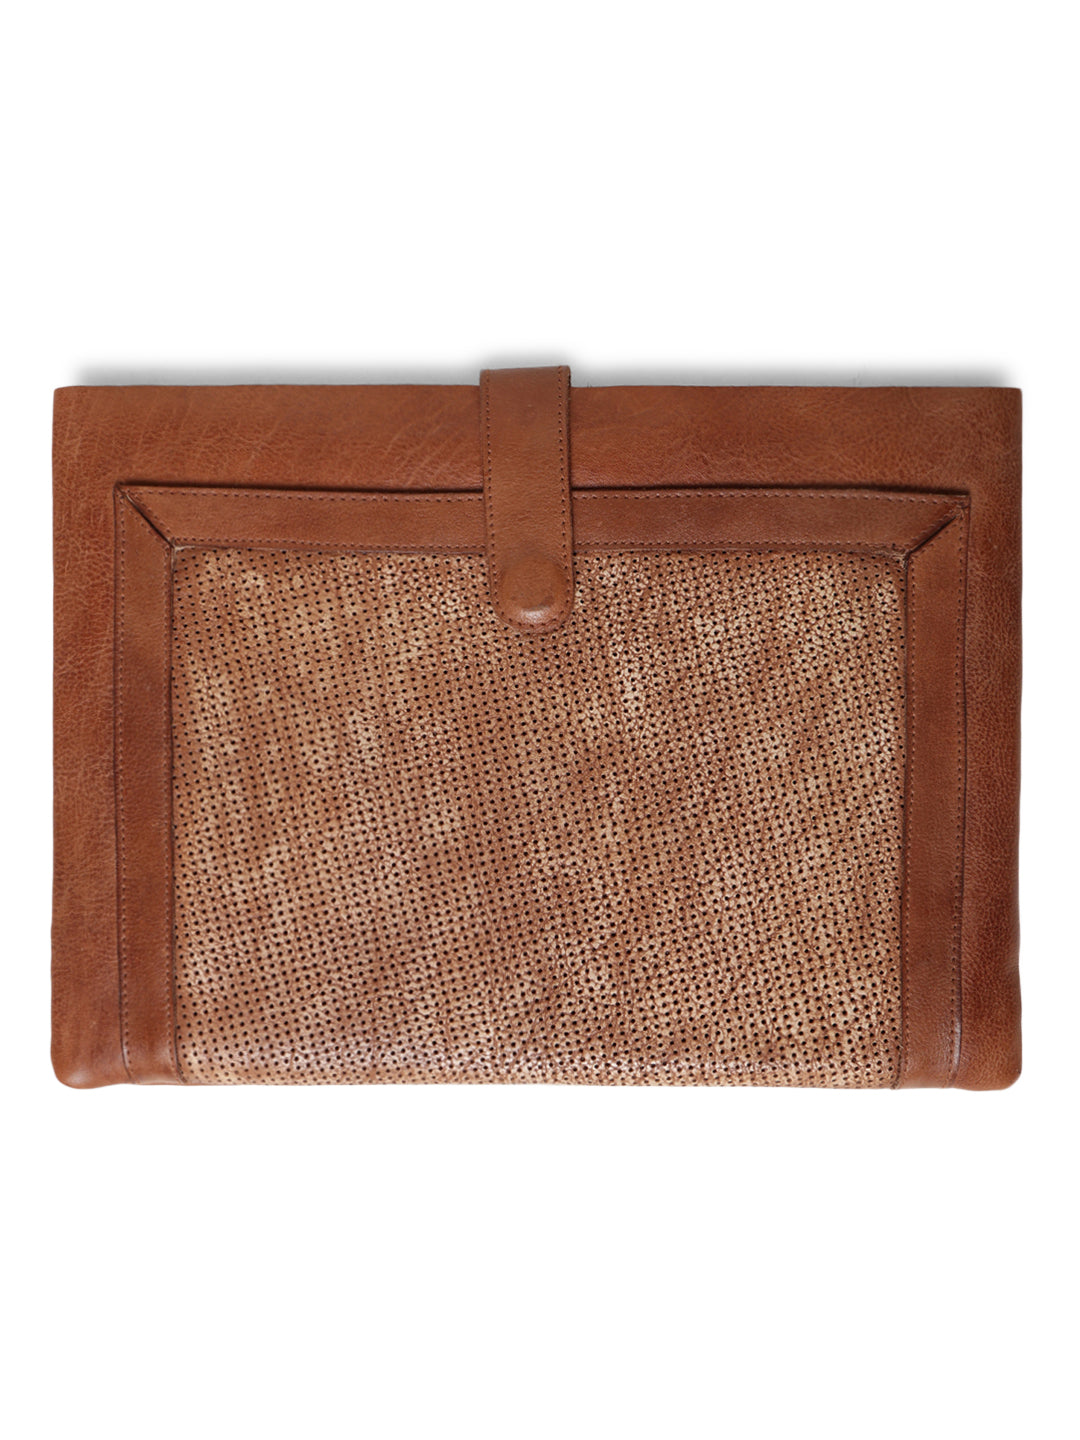 EleganceWrap Cognac Leather Laptop Cases